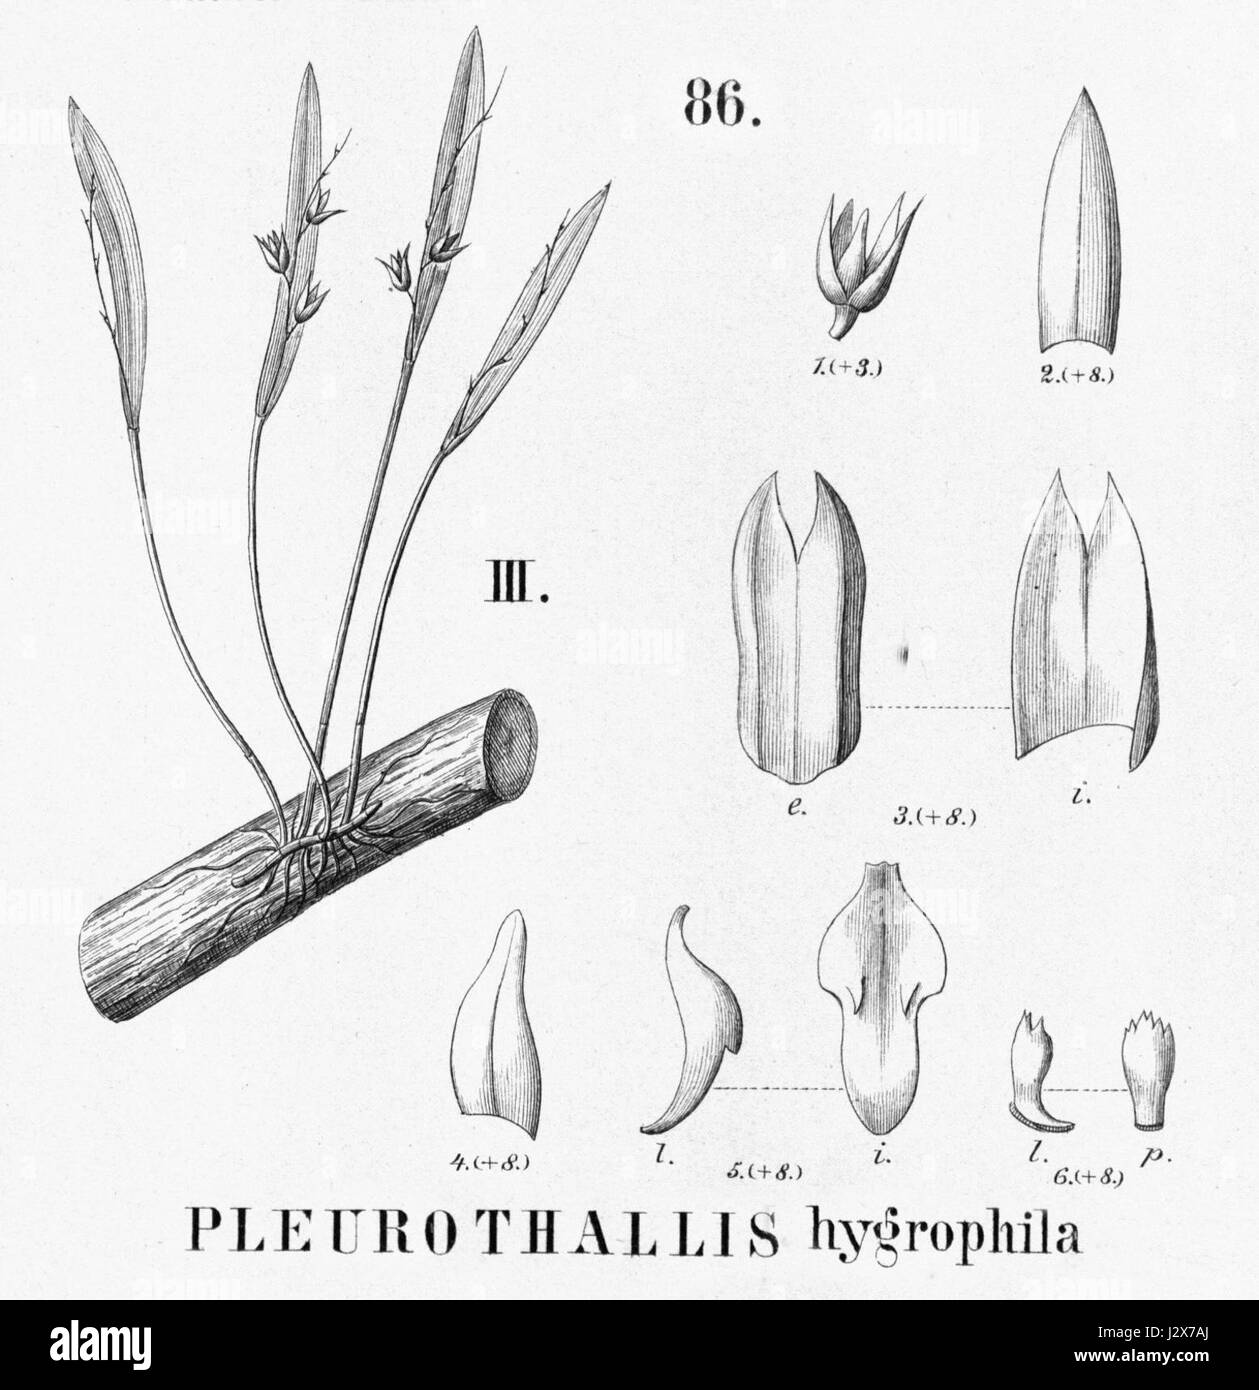 Acianthera hygrophila (as Pleurothallis hygrophila) - cutout from Flora Brasiliensis 3-4-86 fig III Stock Photo